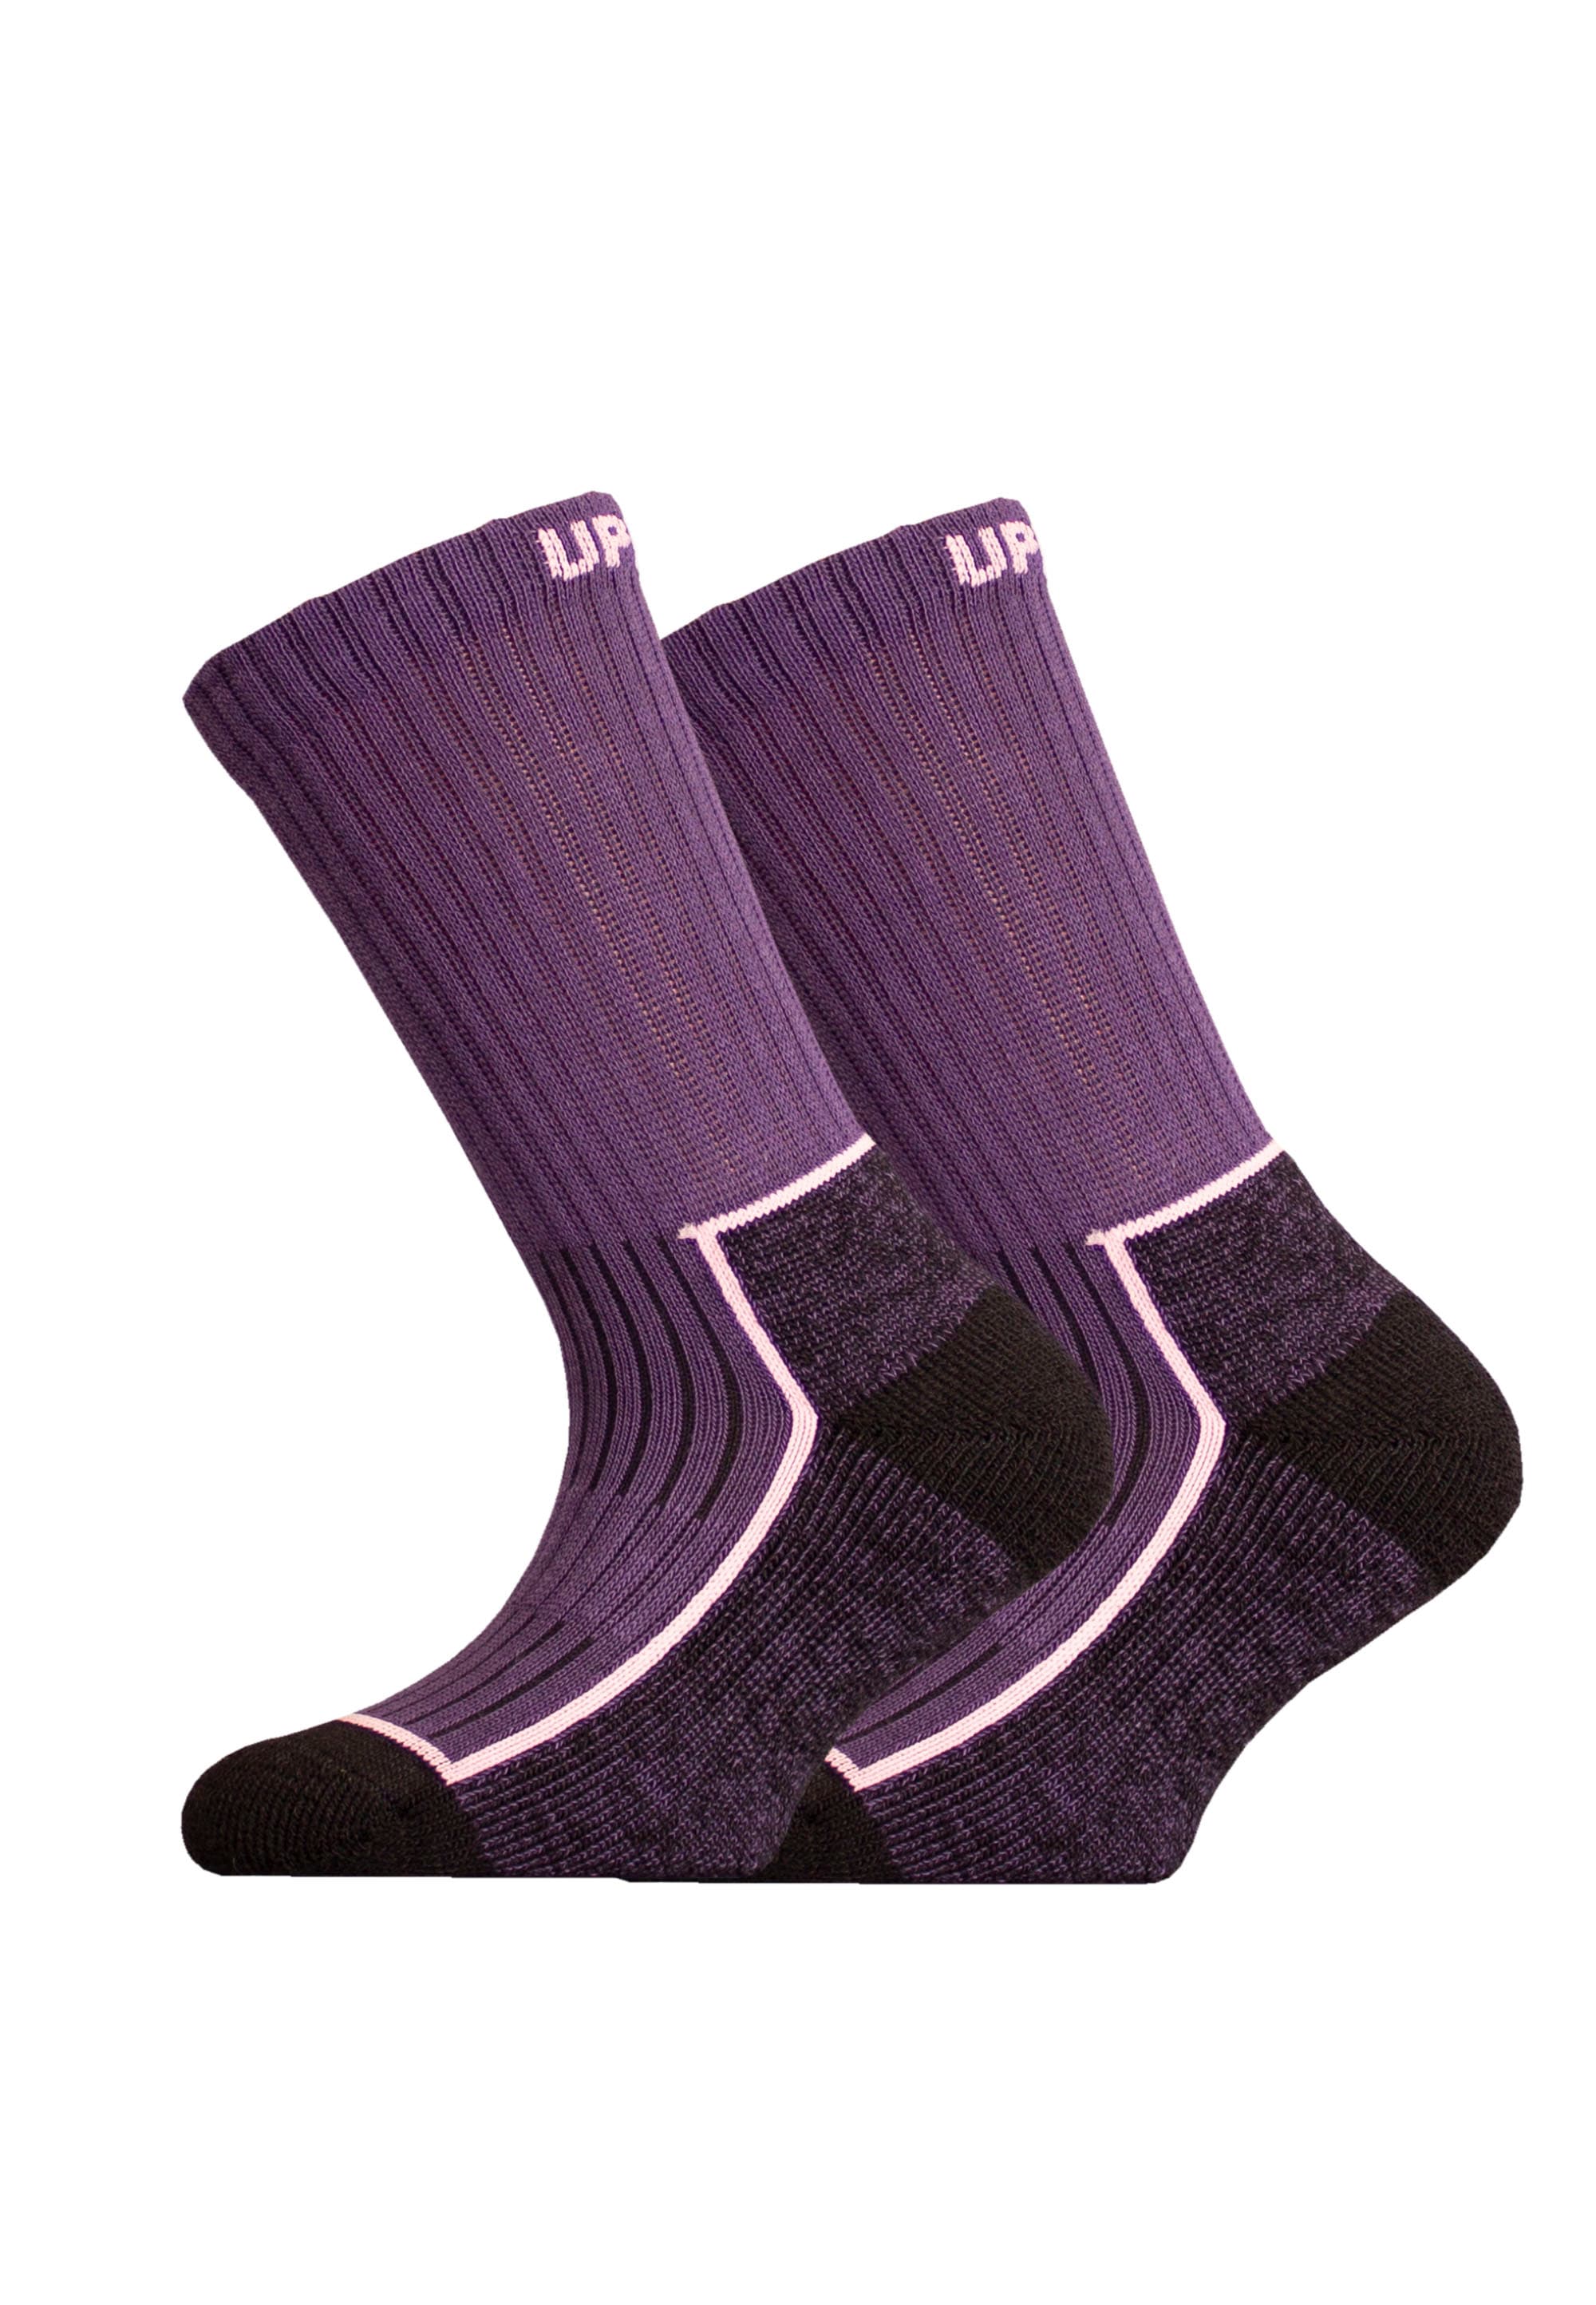 UphillSport Socken Pack«, 2er Paar), JR »SAANA BAUR (2 bestellen | Flextech-Struktur mit